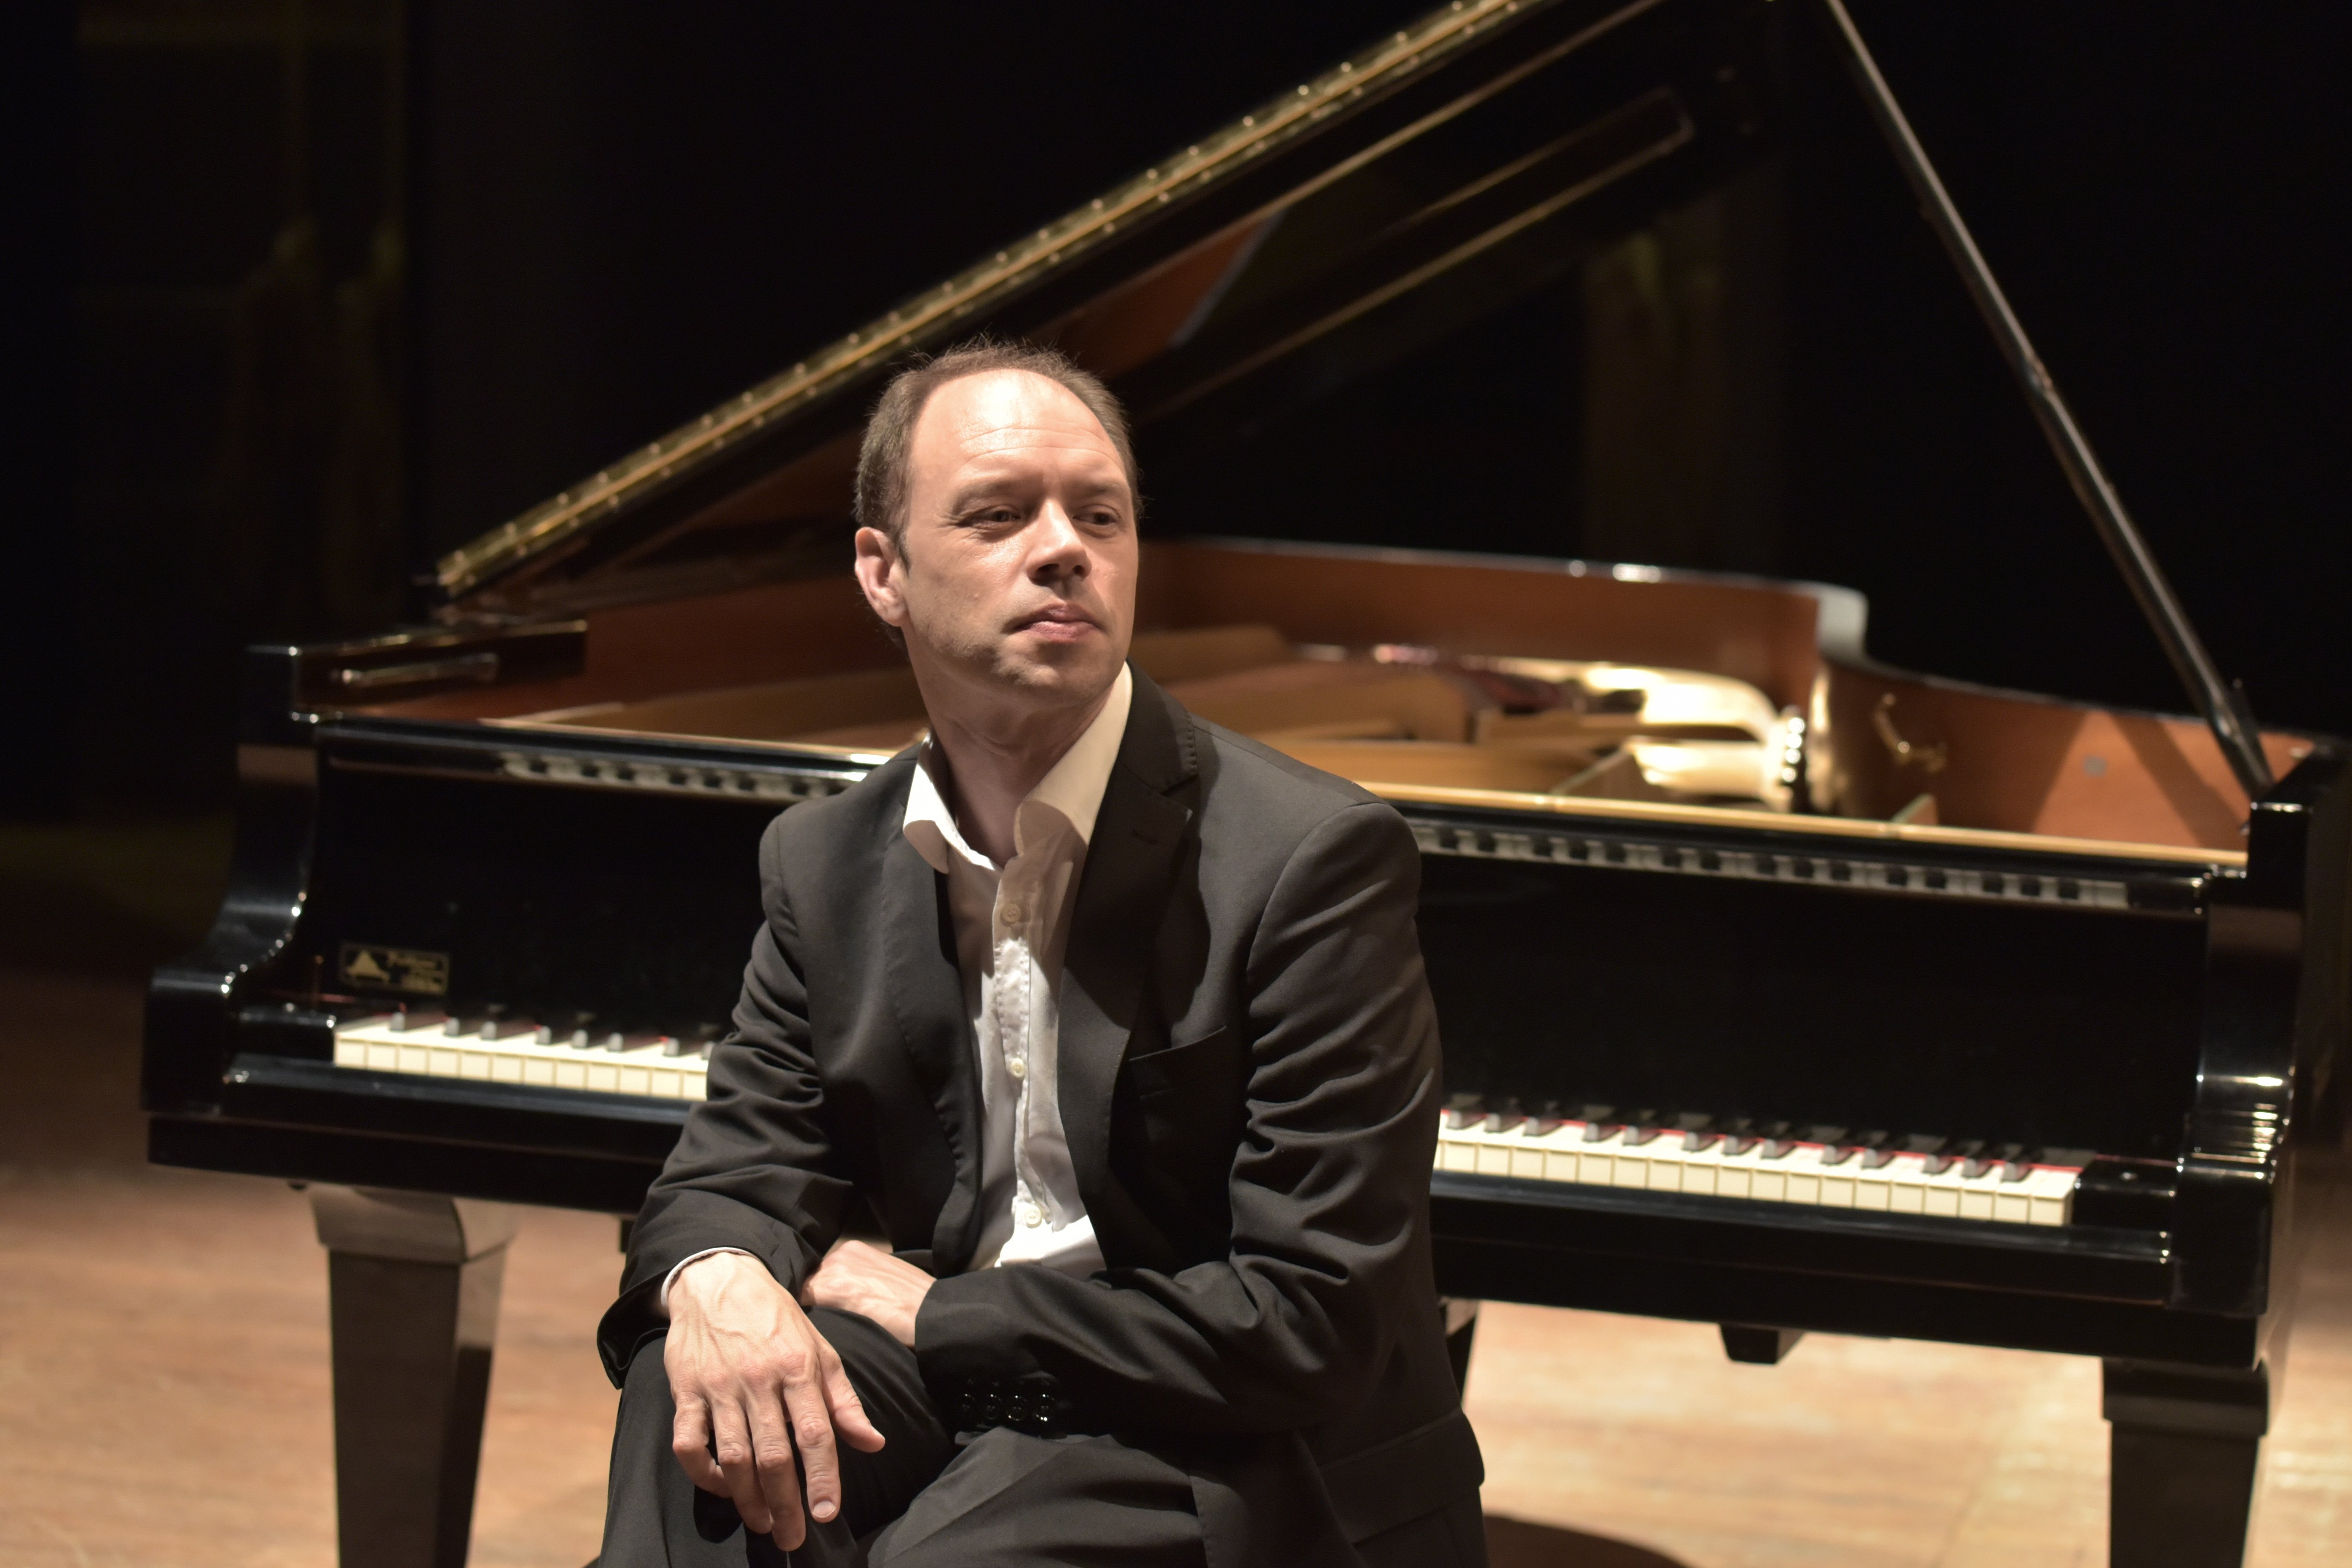 Al festival Echos si esibisce il noto pianista Olaf John Laneri